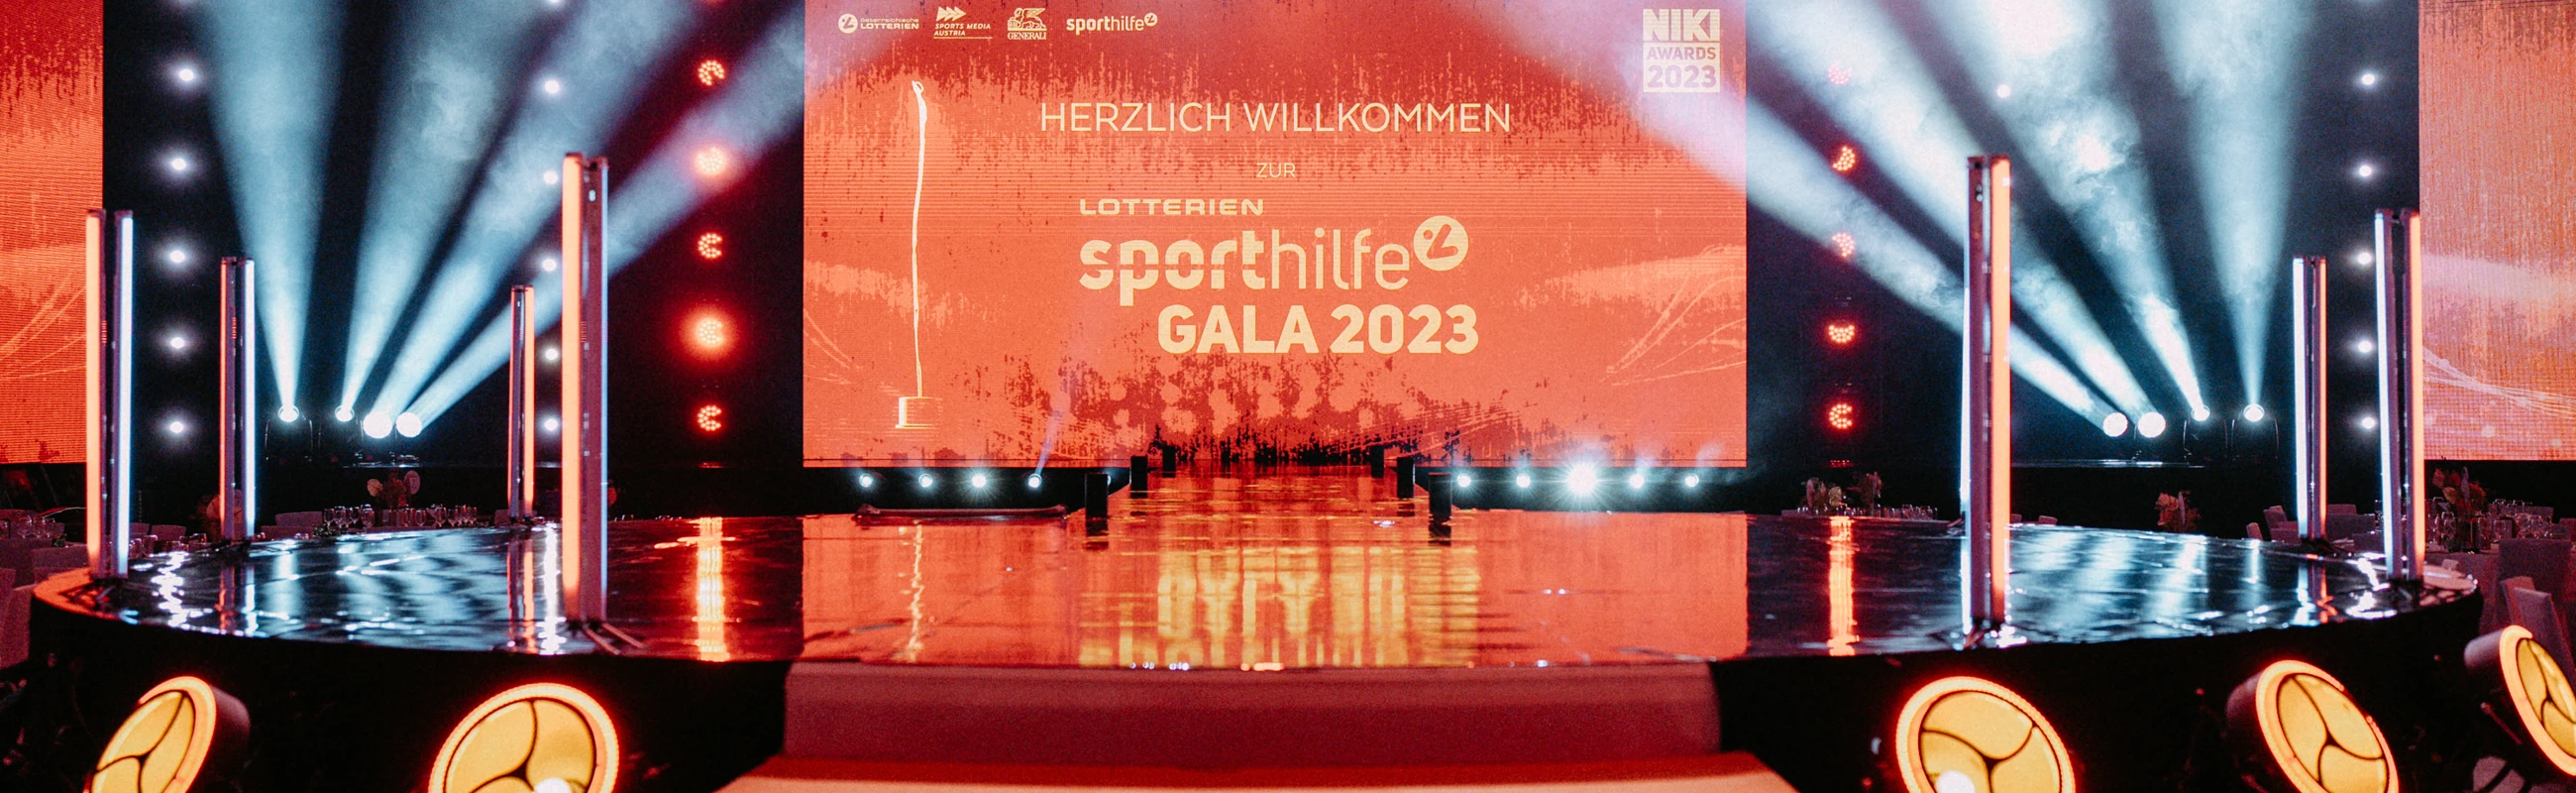 2023 Sporthilfe Gala 04